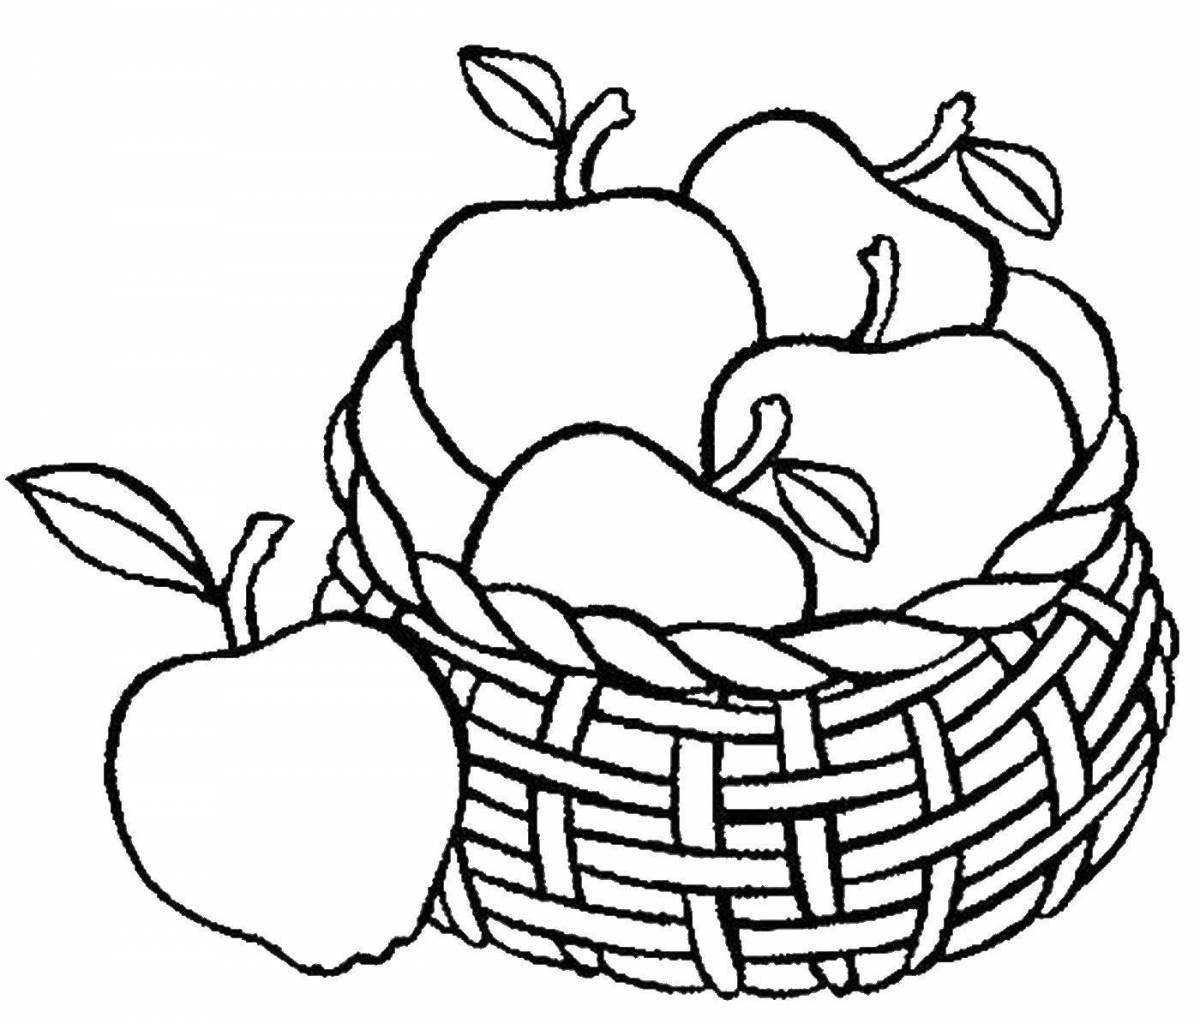 Coloring book bright fruit basket